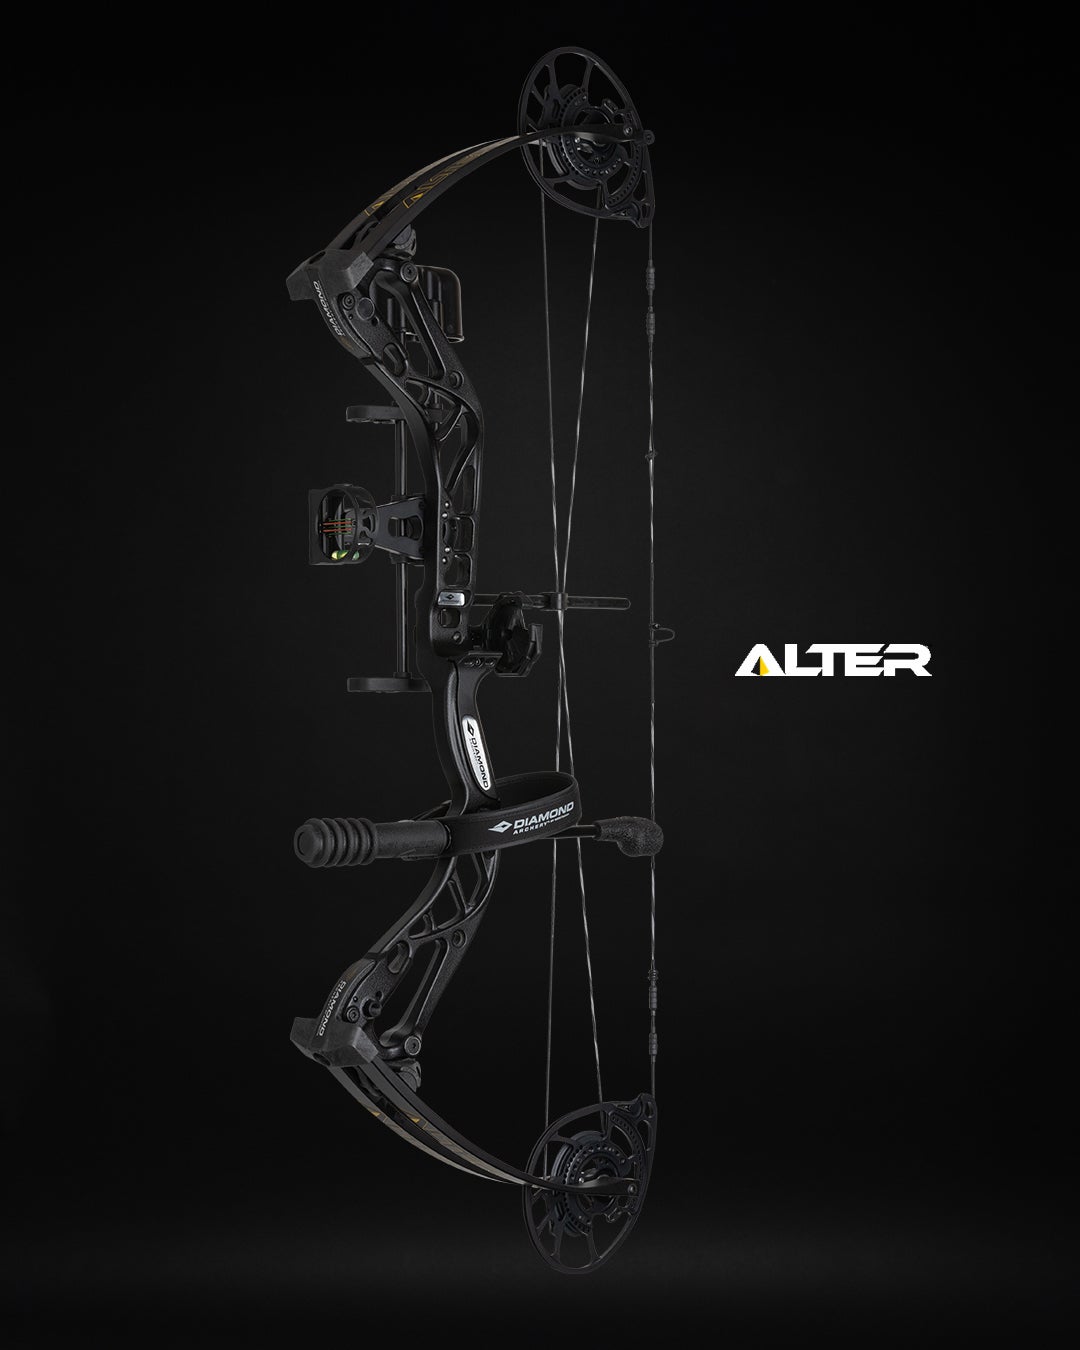 Diamond Archery Introduces the New Versatile Alter Bow